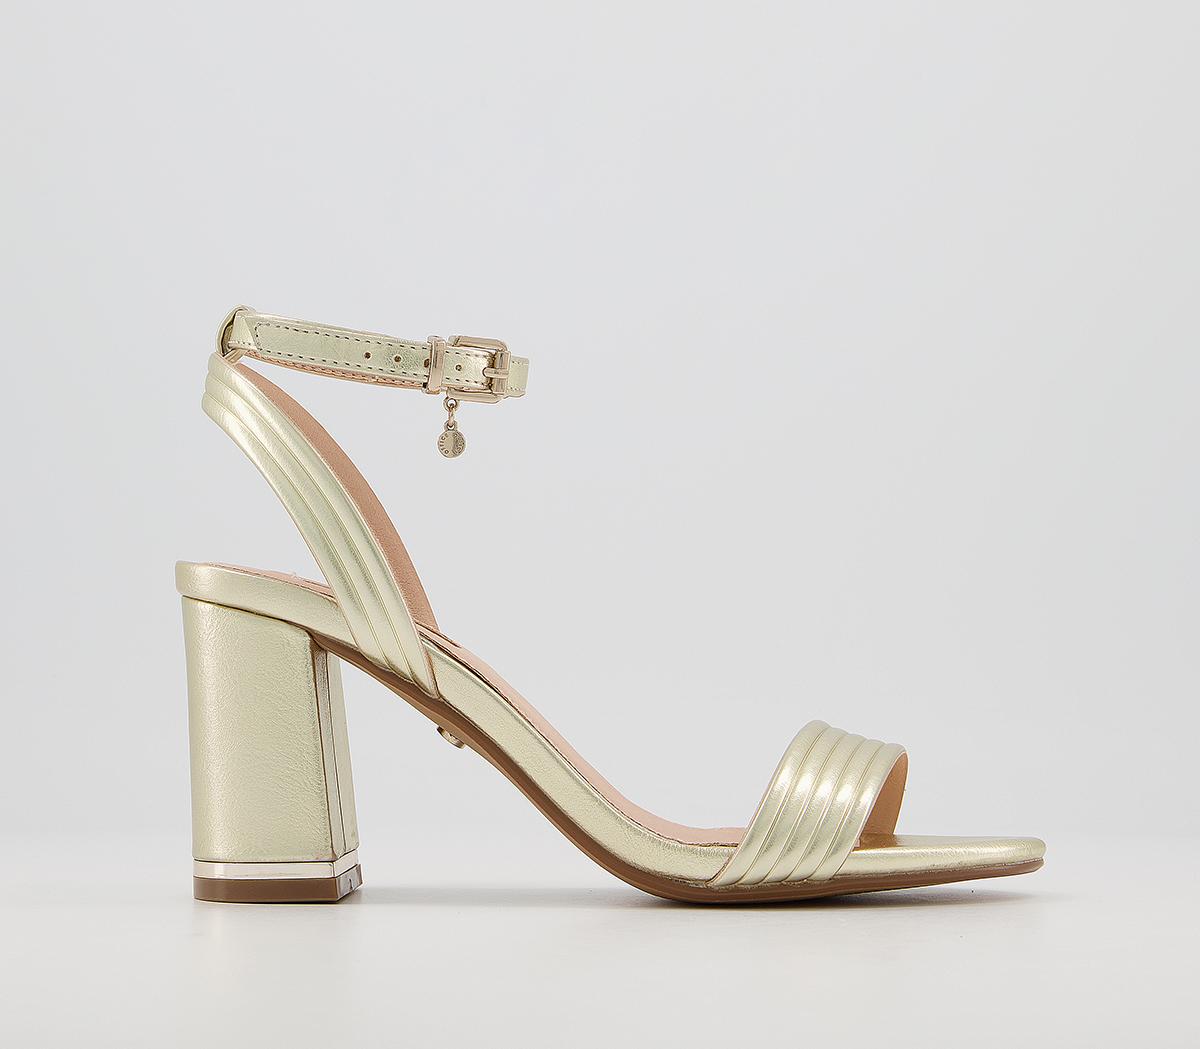 gold mid heels